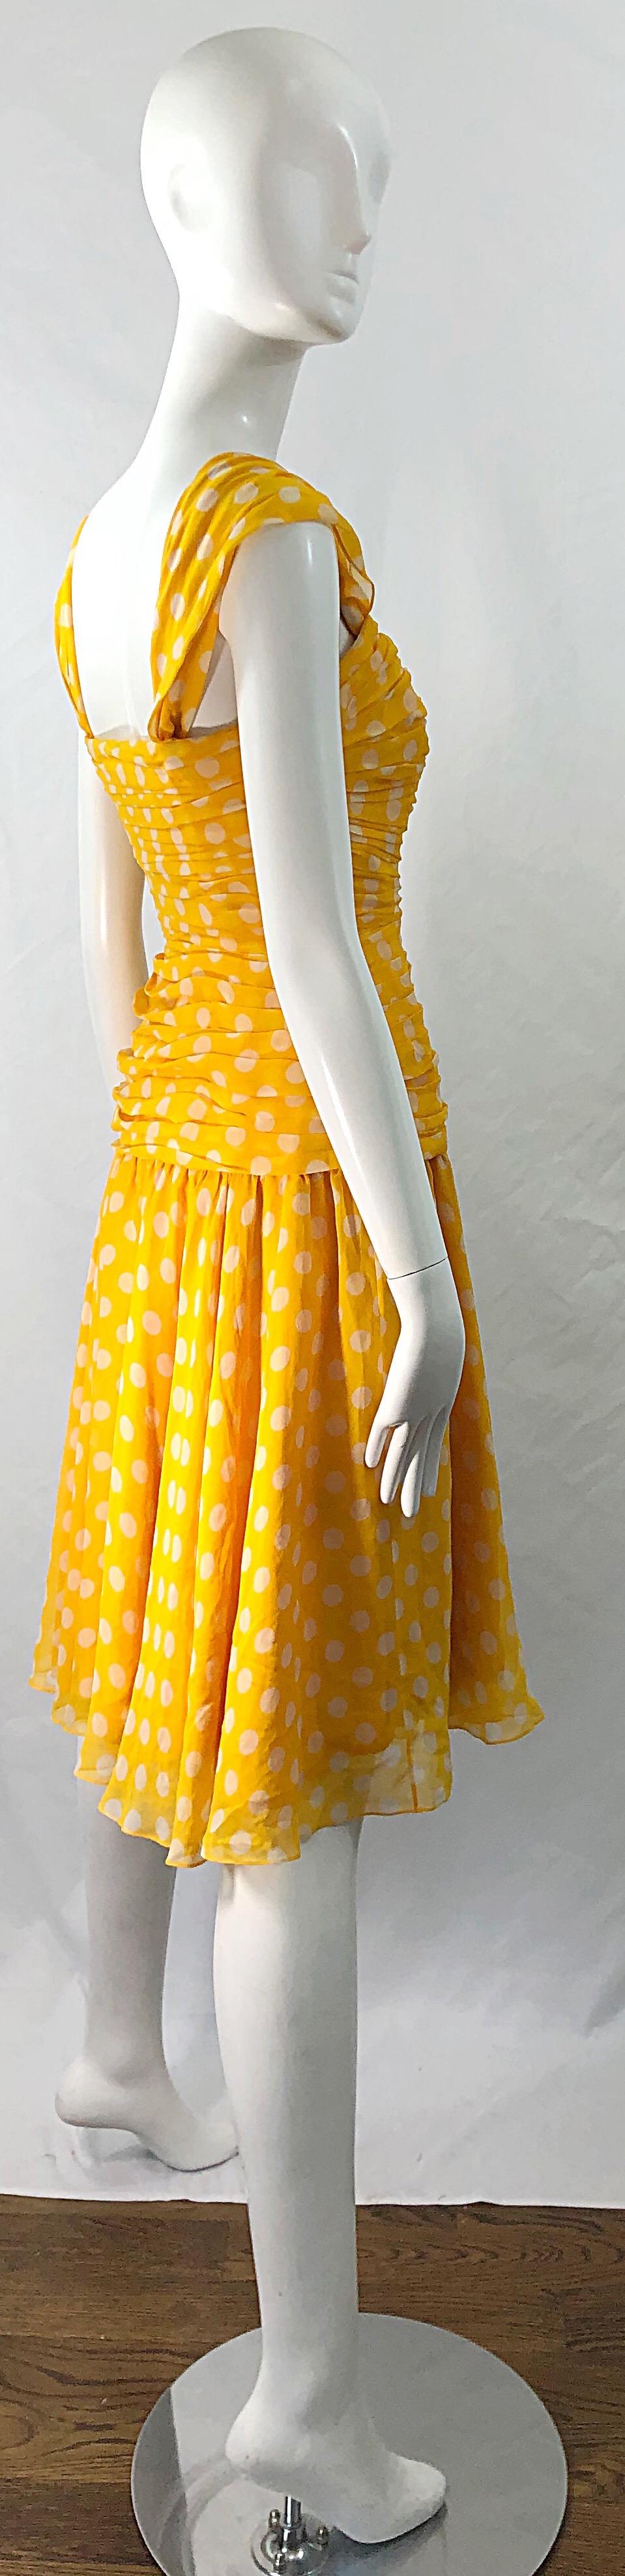 1980s polka dot dress